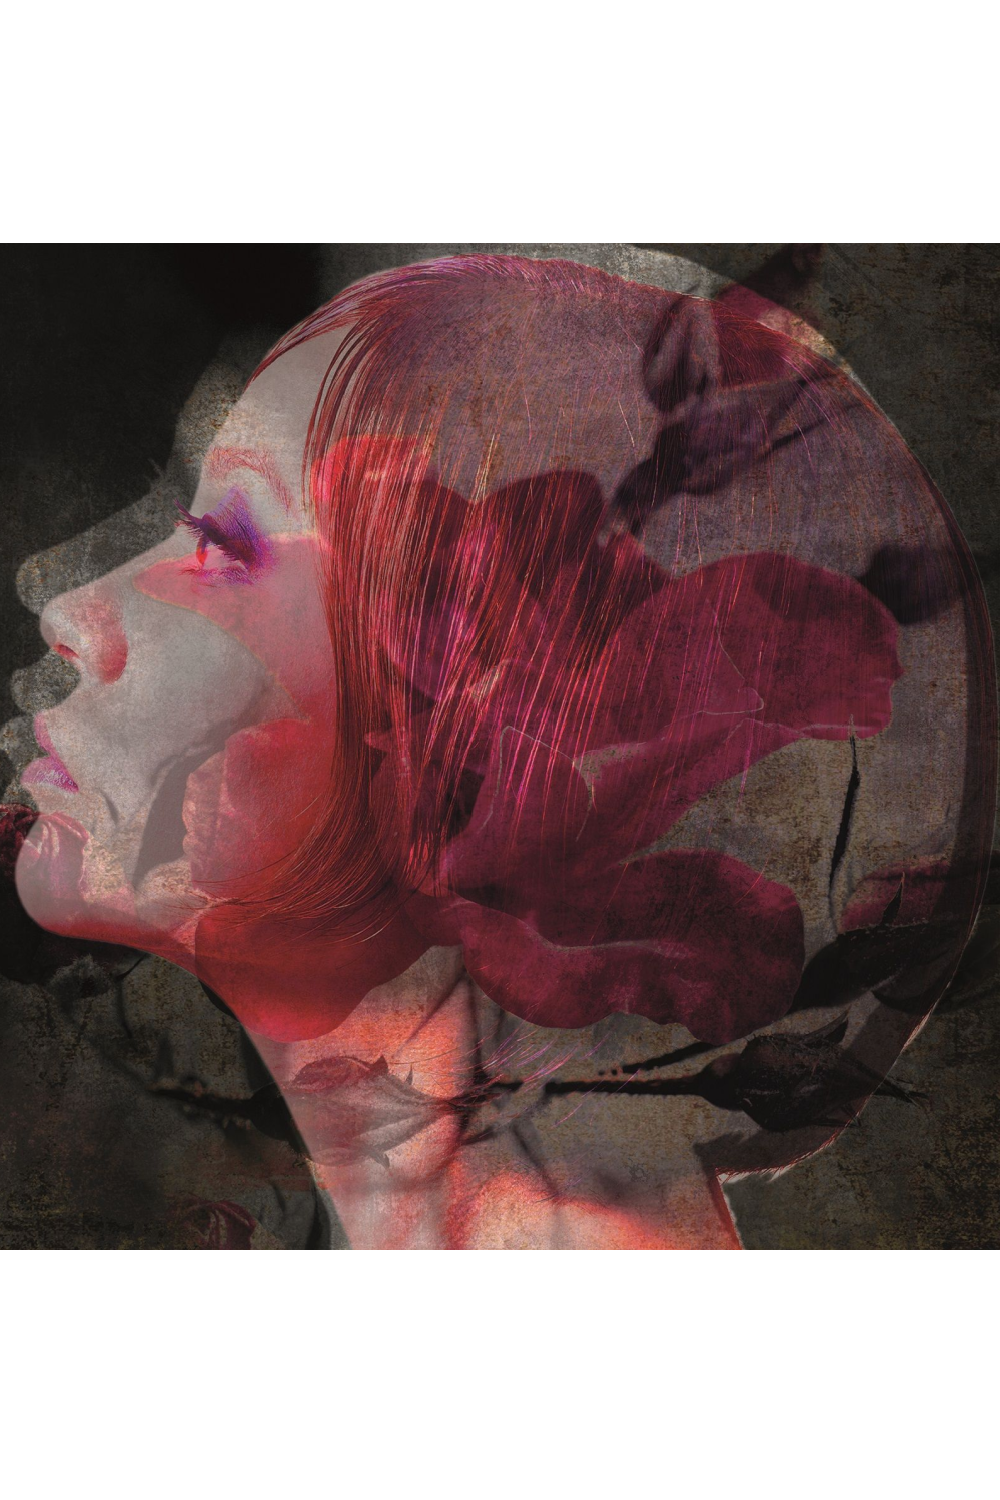 Woman's Side Portrait Artwork | Andrew Martin Red Black Face | Oroa.com